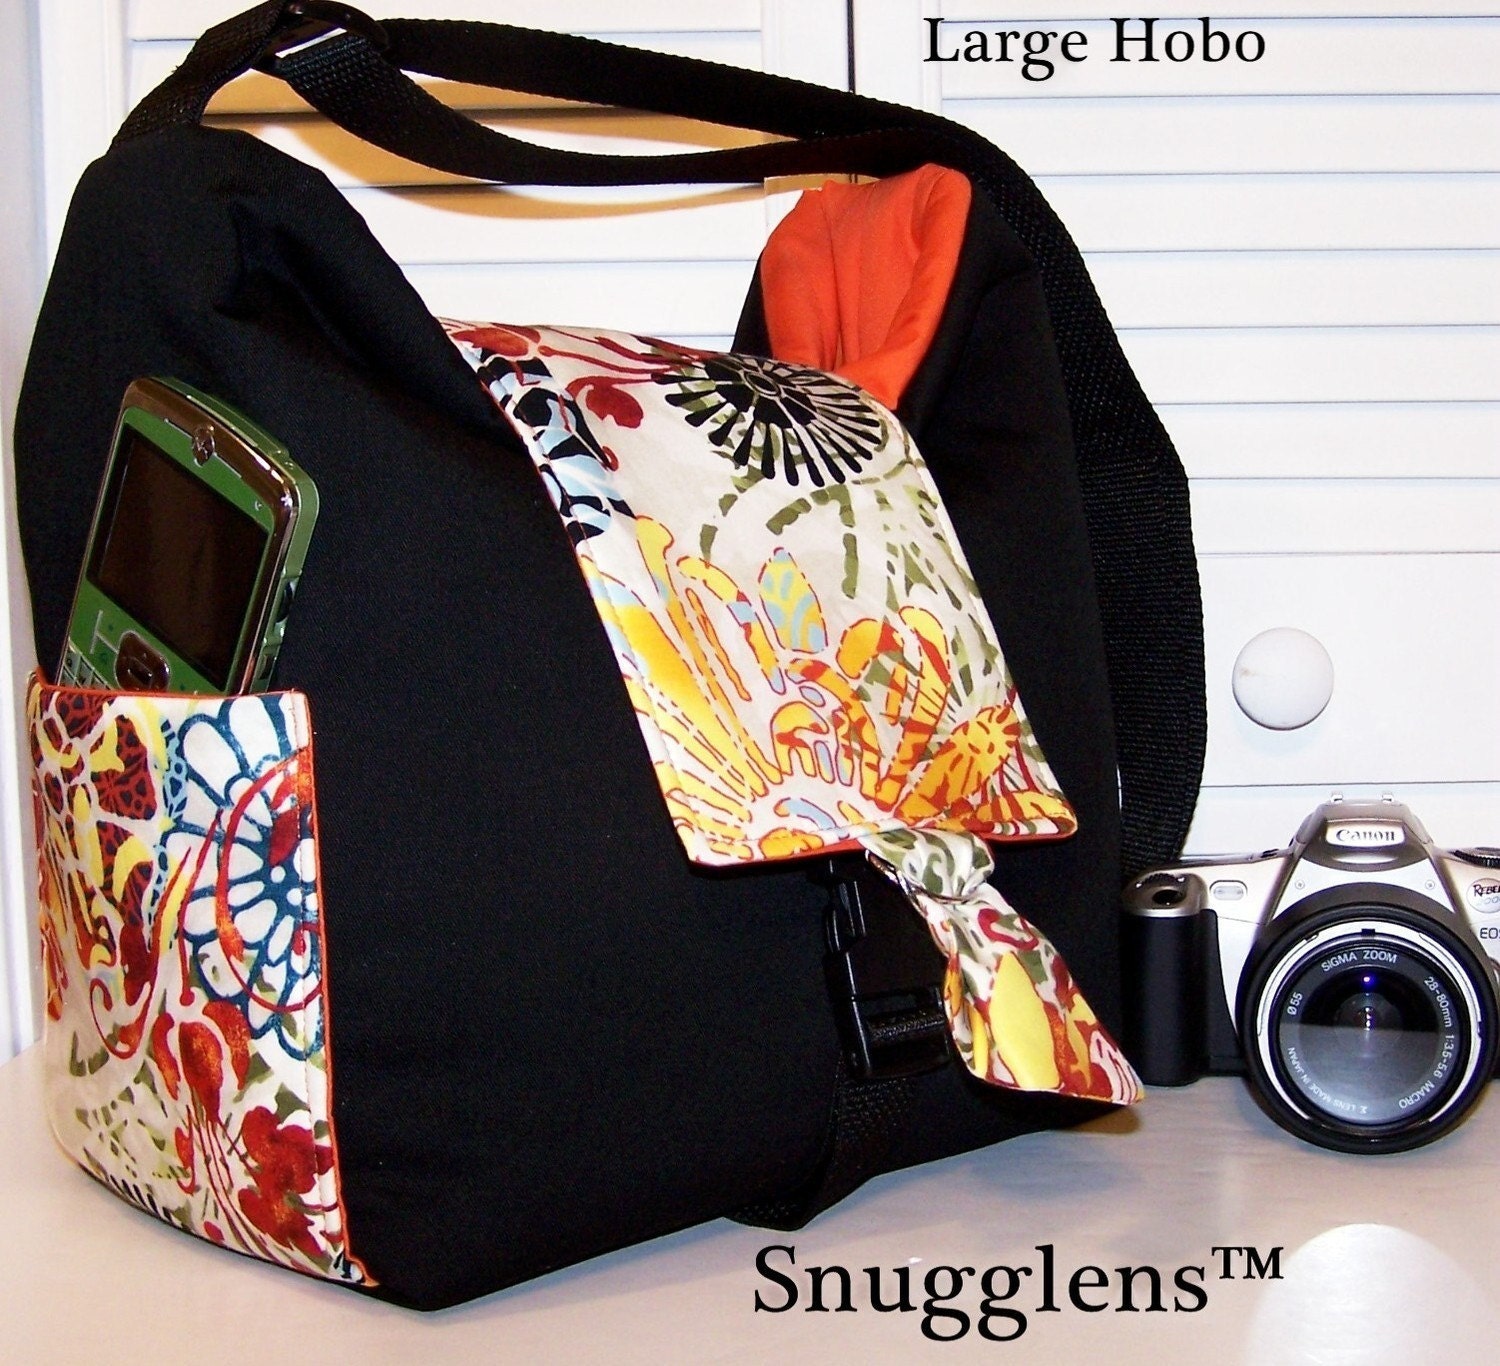 CUSTOM Digital SLR HOBO Camera Bag..LARGE..Sundance/orange interior Snugglens